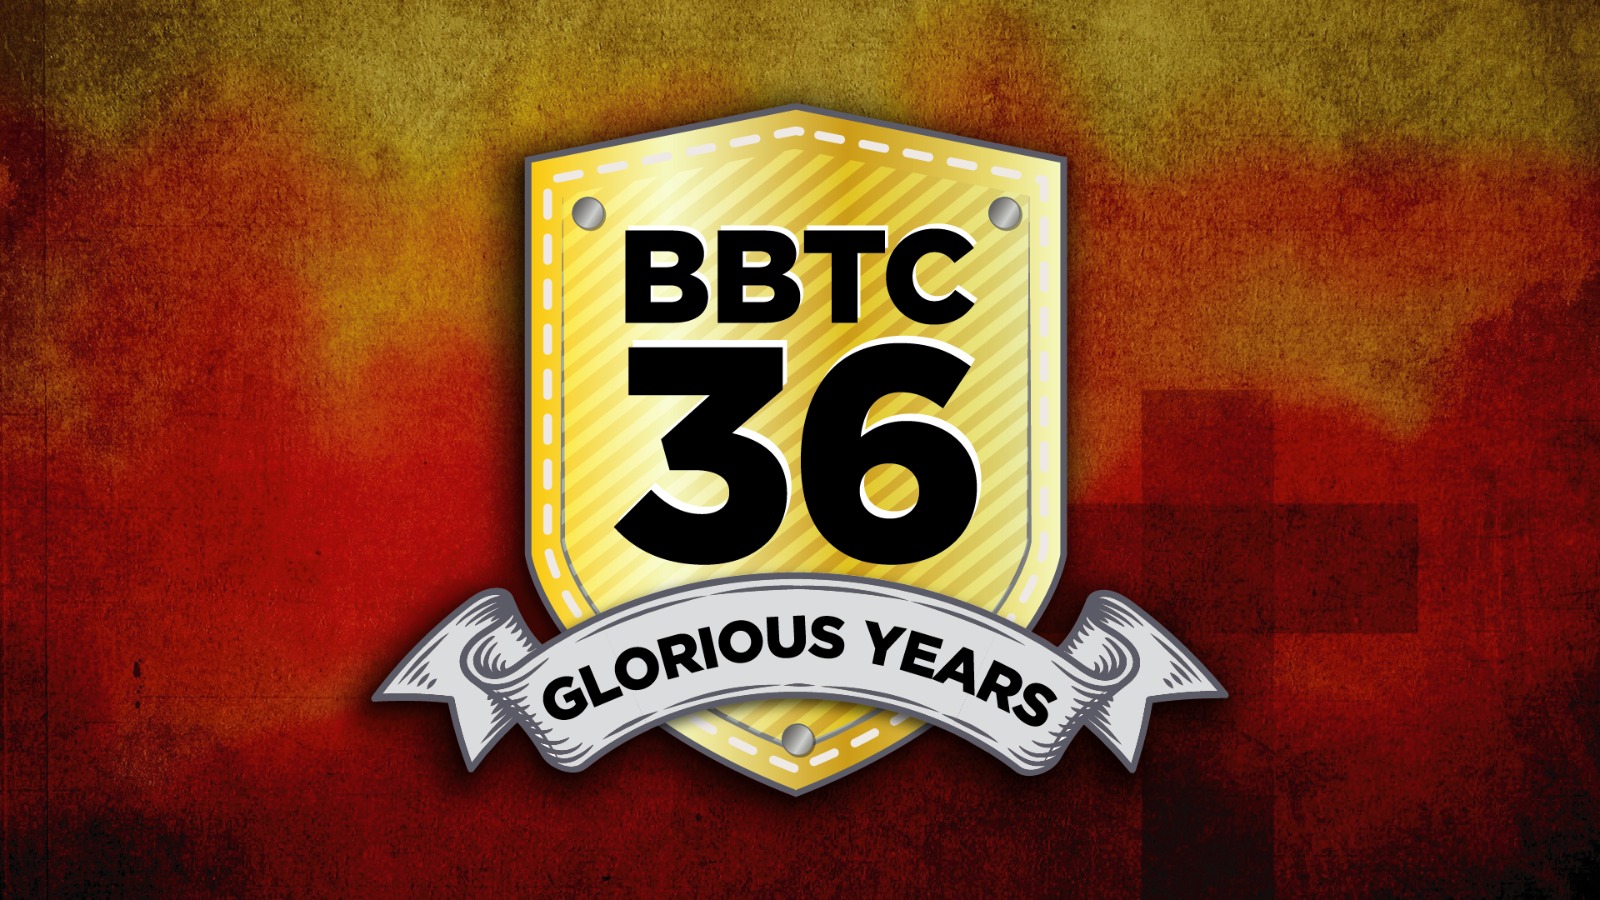 BBTC 36TH Anniversary:  What Makes a Great Local Church?